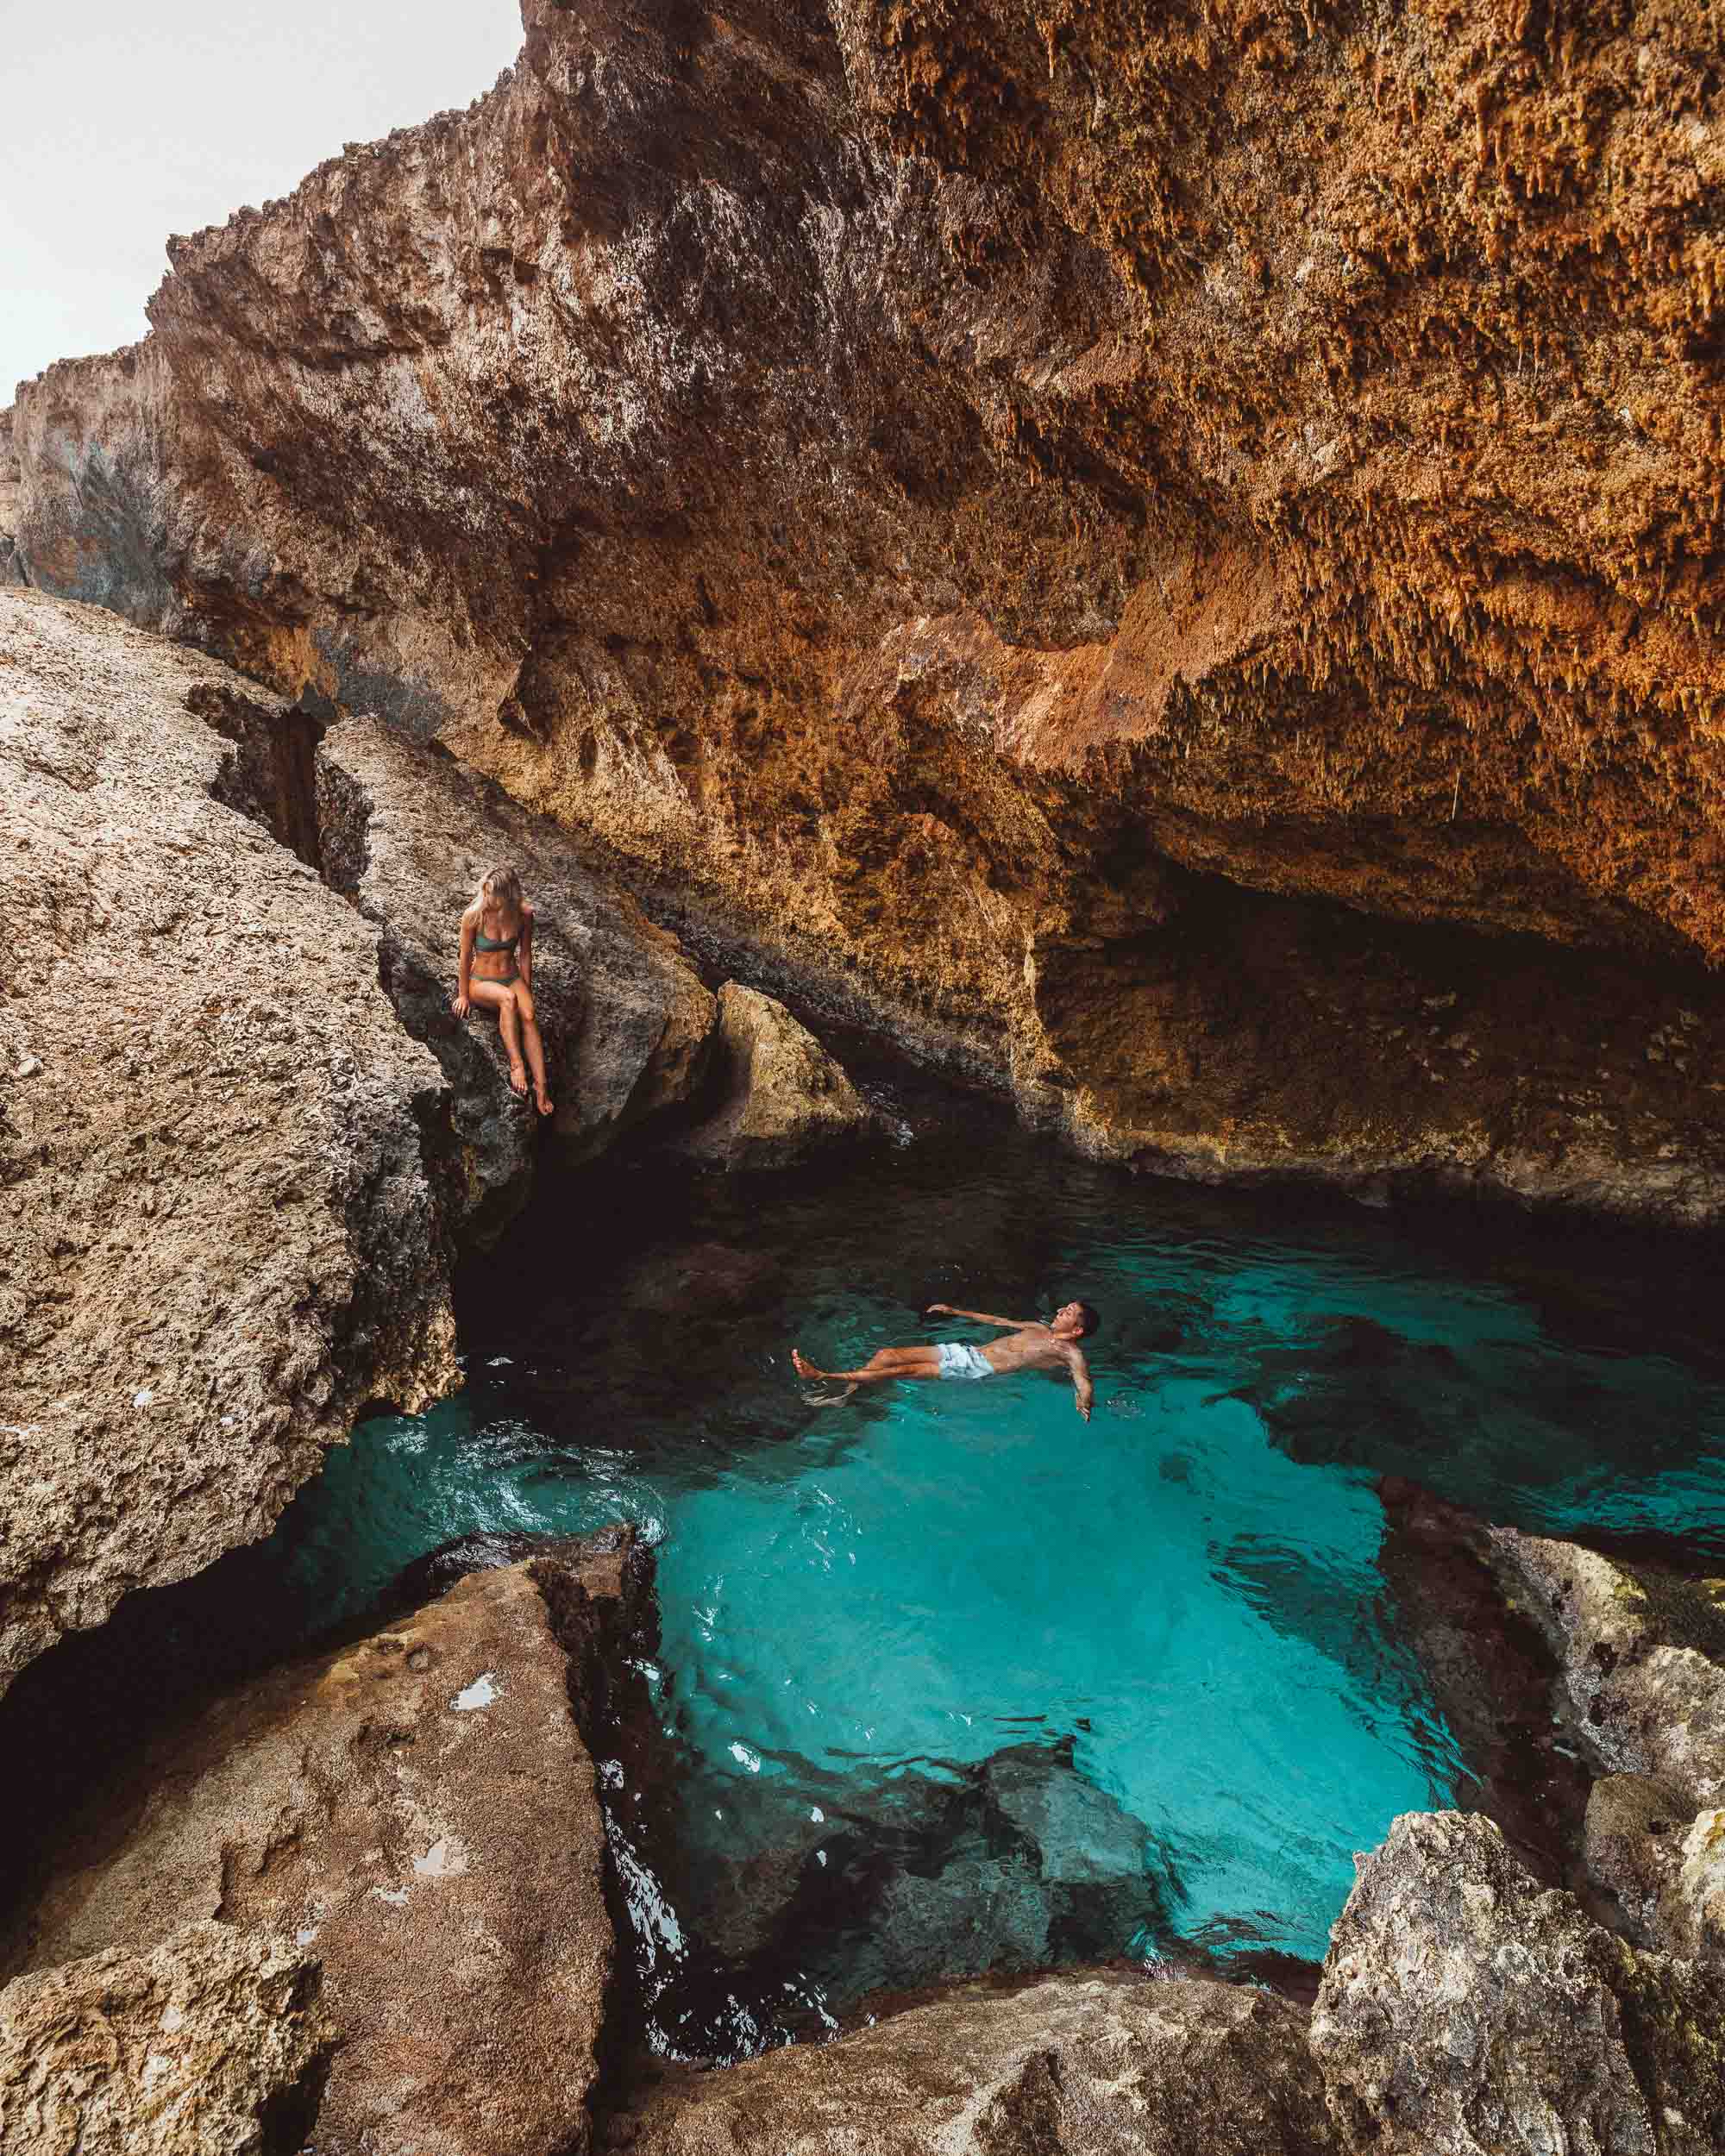 Natural swimming hole in Aruba via Find Us Lost